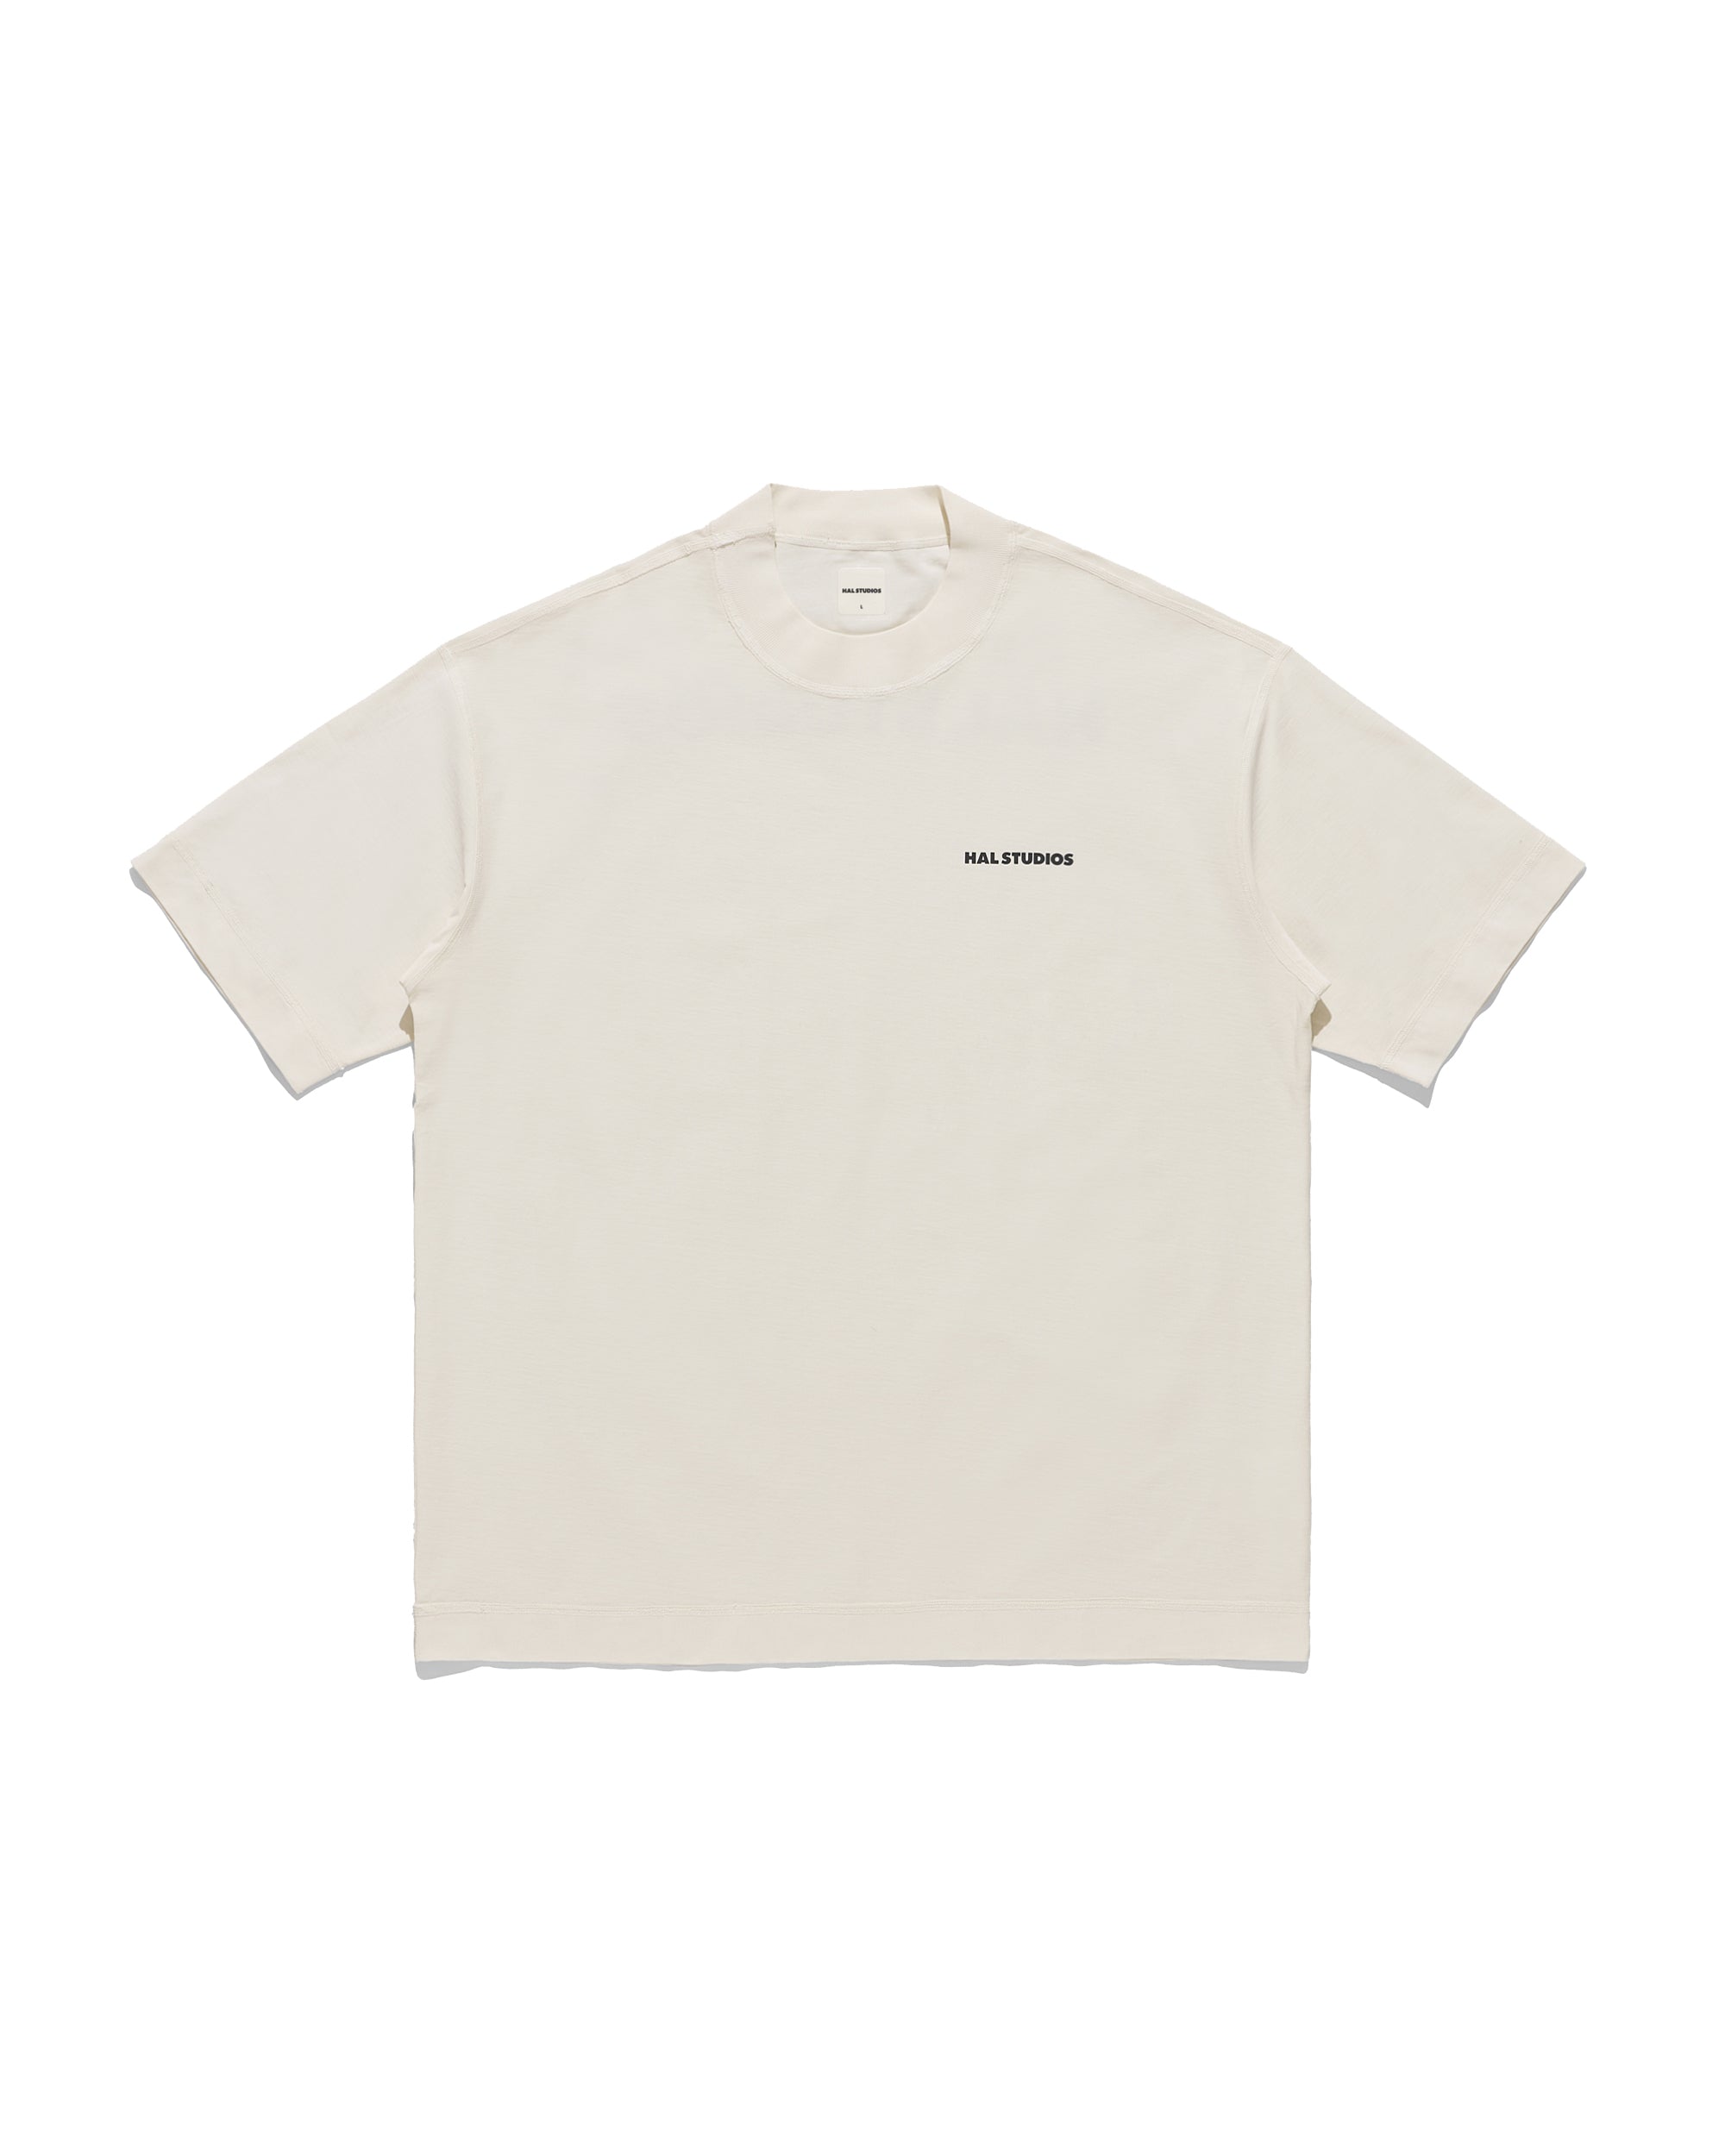 Inside Out Uniform T-Shirt - Off-White